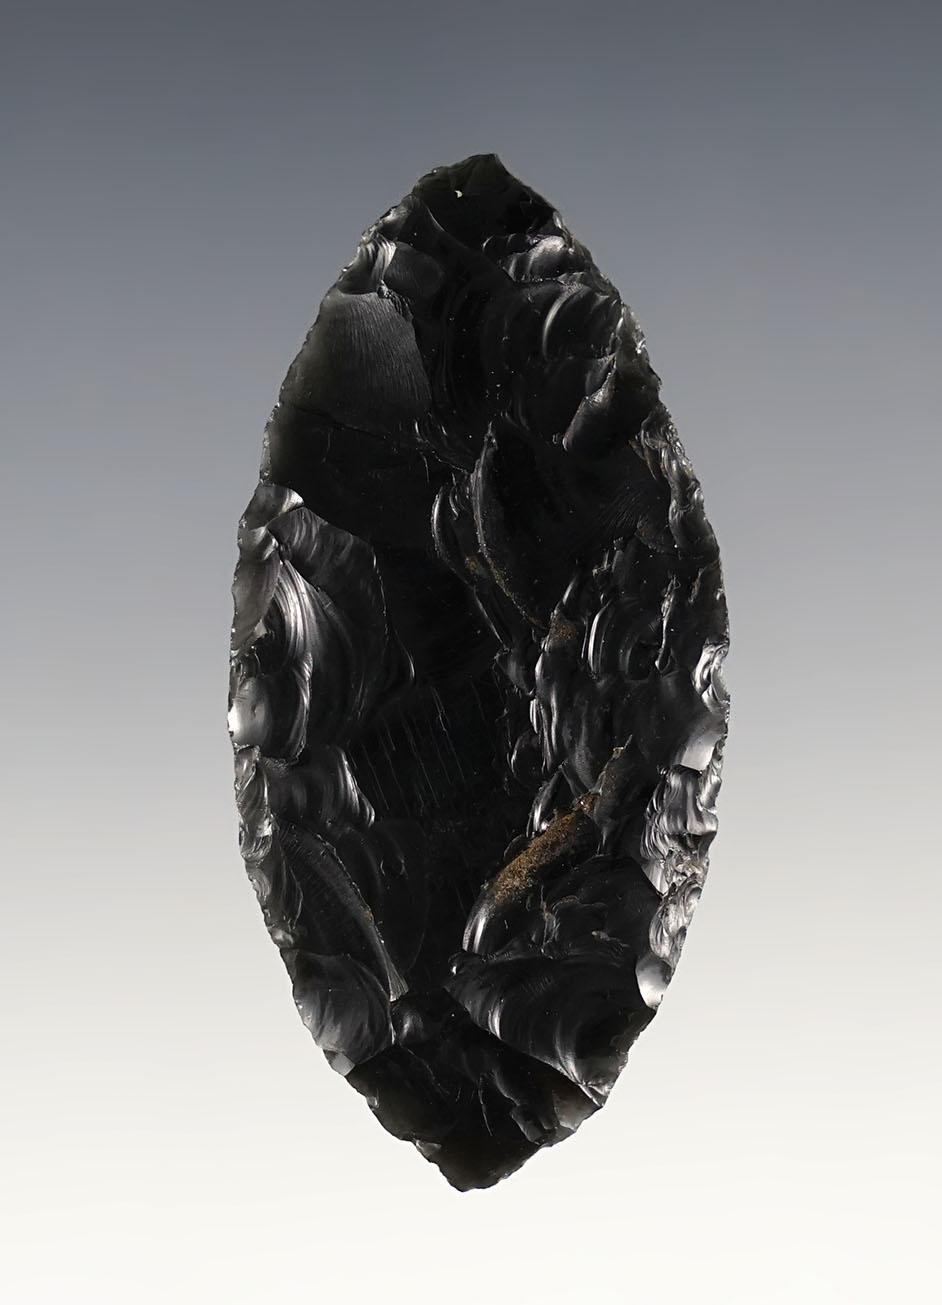 2 1/2" Obsidian Blade found in the 1950's near Crump Lake, Warner Valley, Lake Co., Oregon.